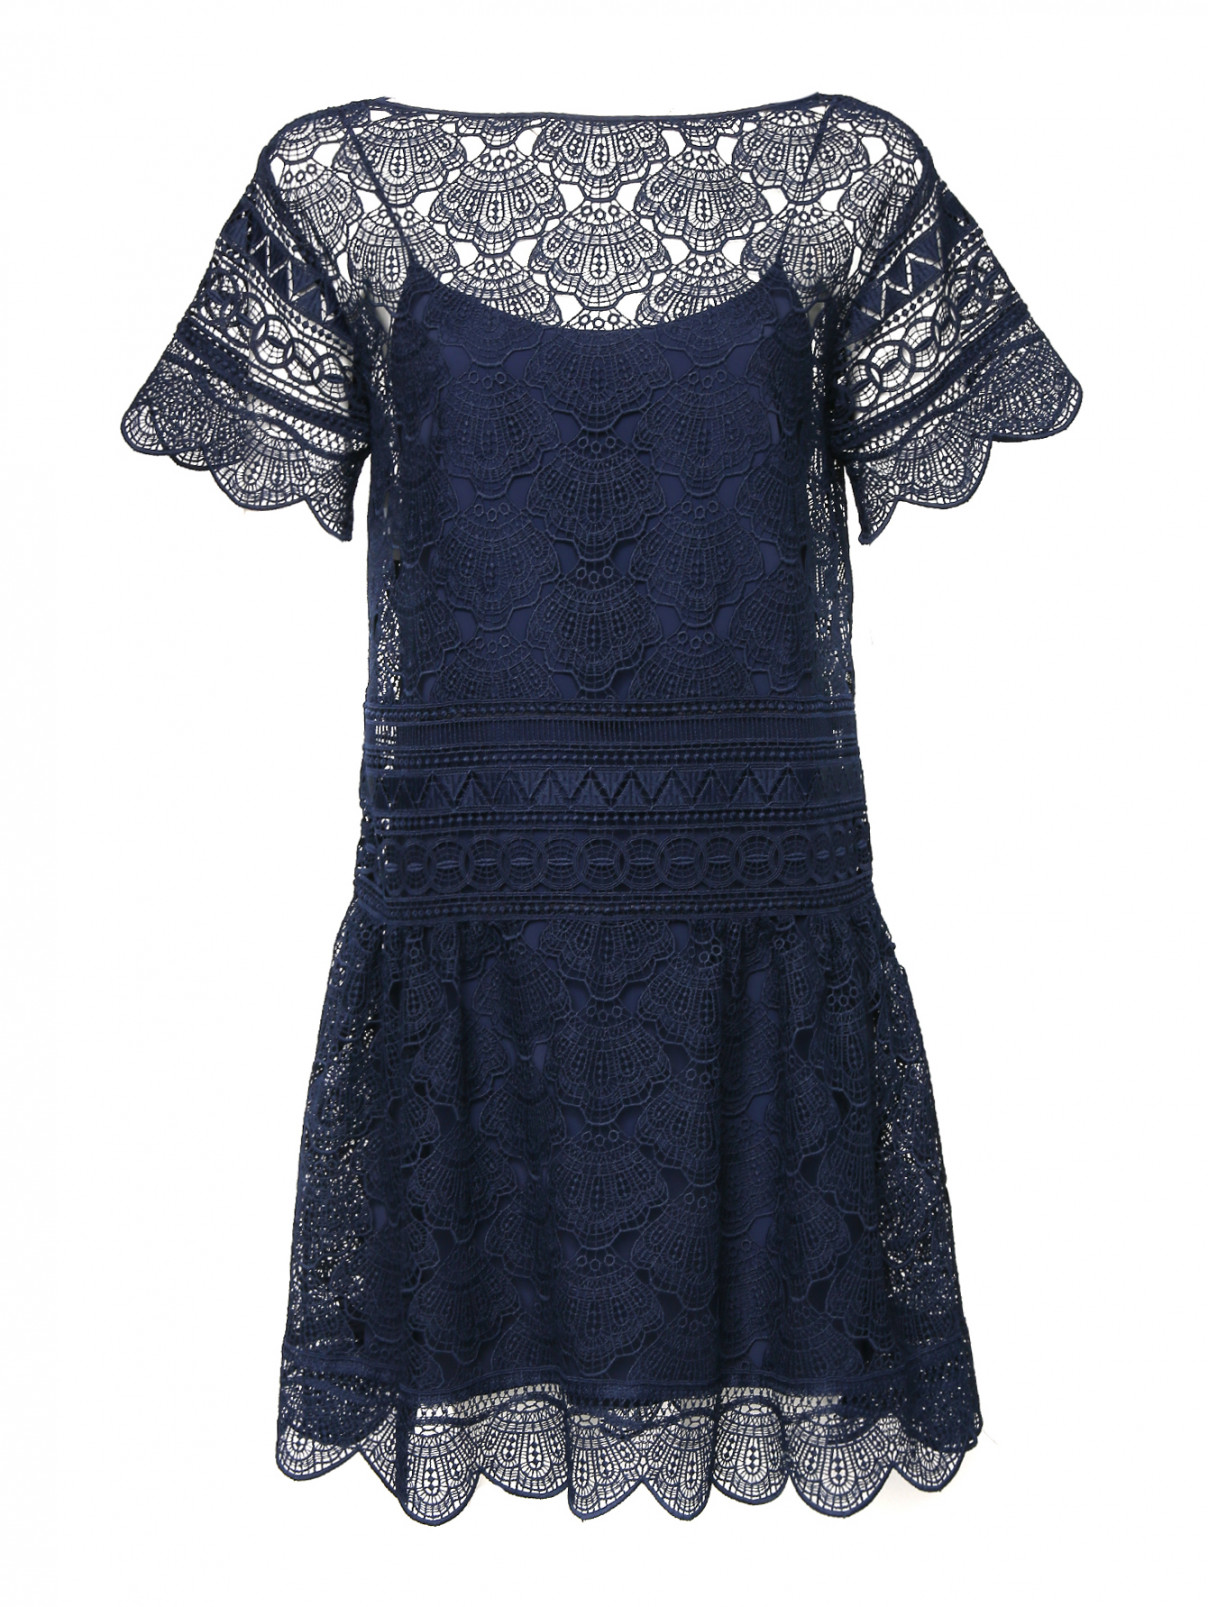 Платье из кружева с короткими рукавами Alberta Ferretti  –  Общий вид  – Цвет:  Синий